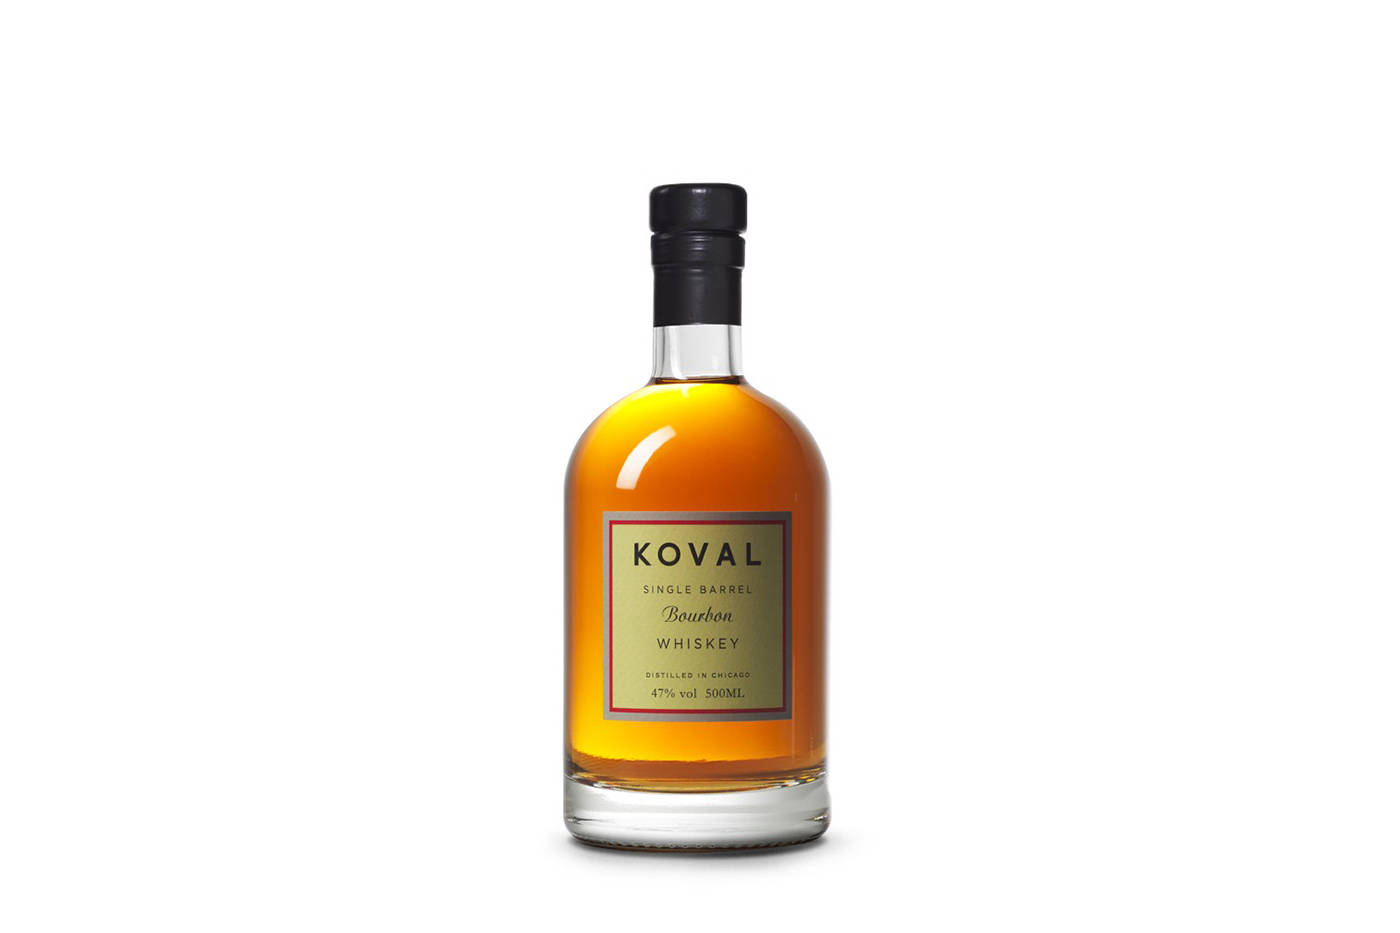 Koval Bourbon Whiskey Background